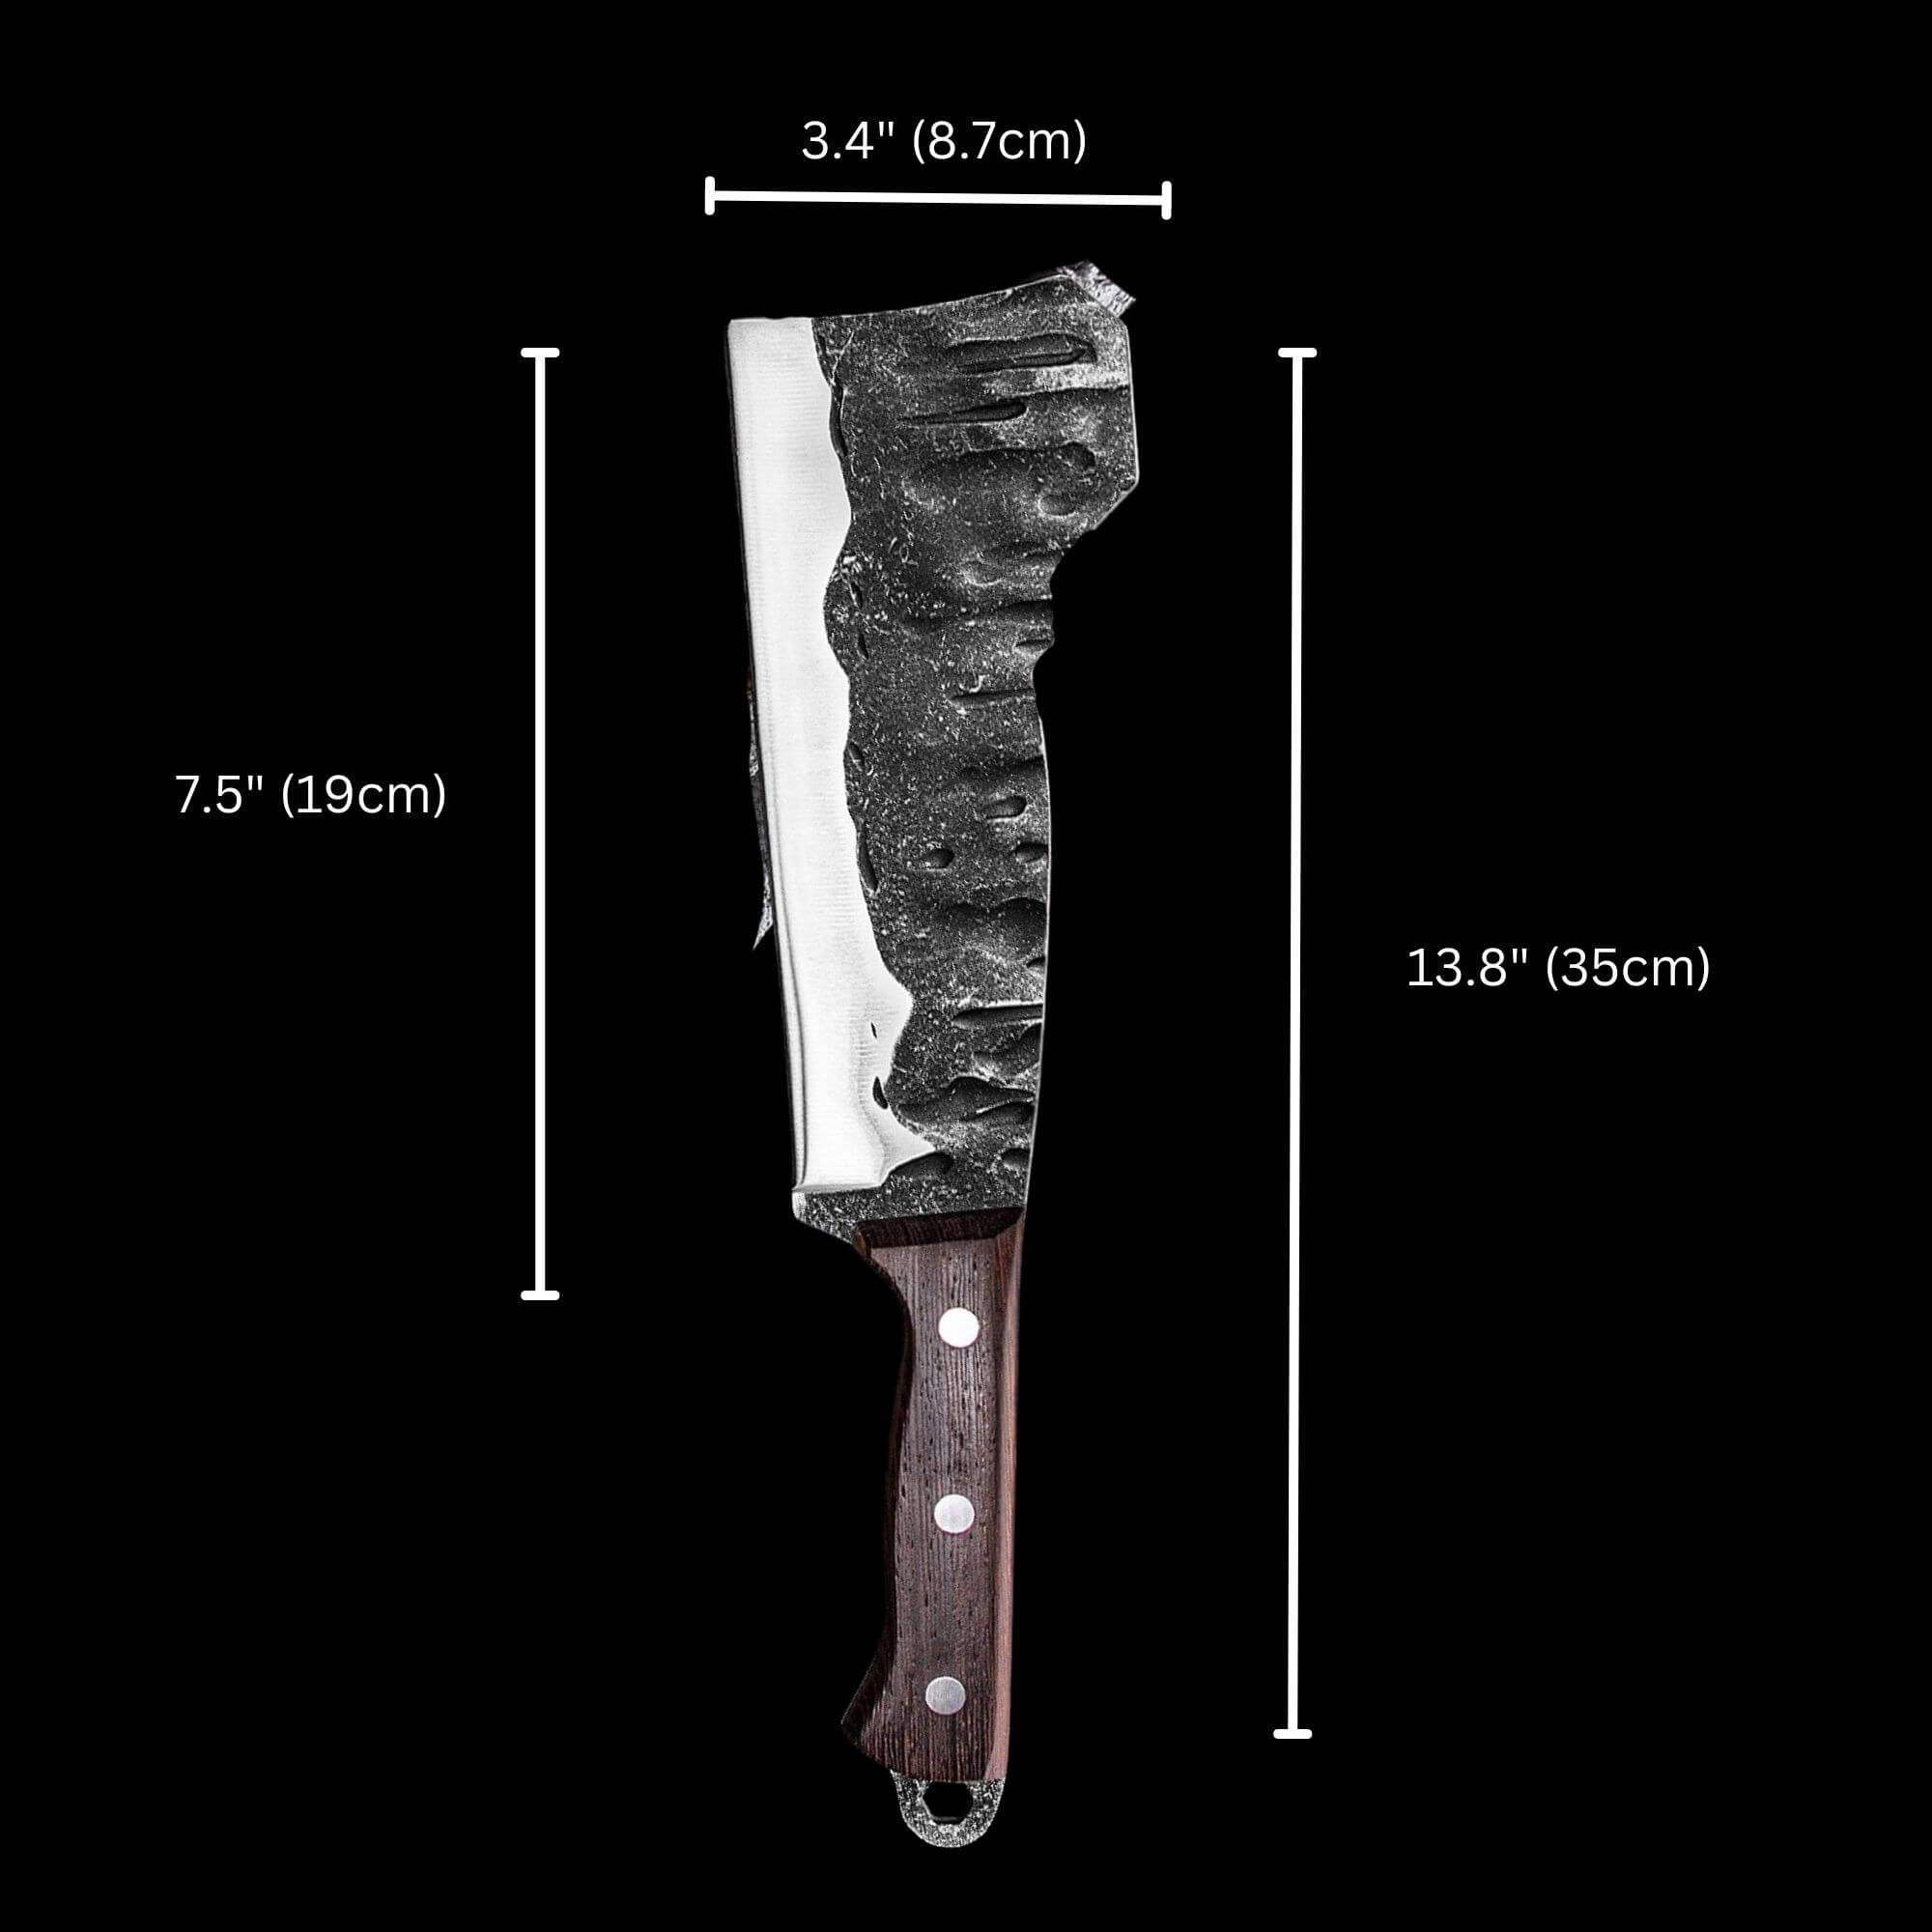 The Choppa Personalized Meat Cleaver Knife - Hatchet W Ebony Wood Handle - Home Wet Bar